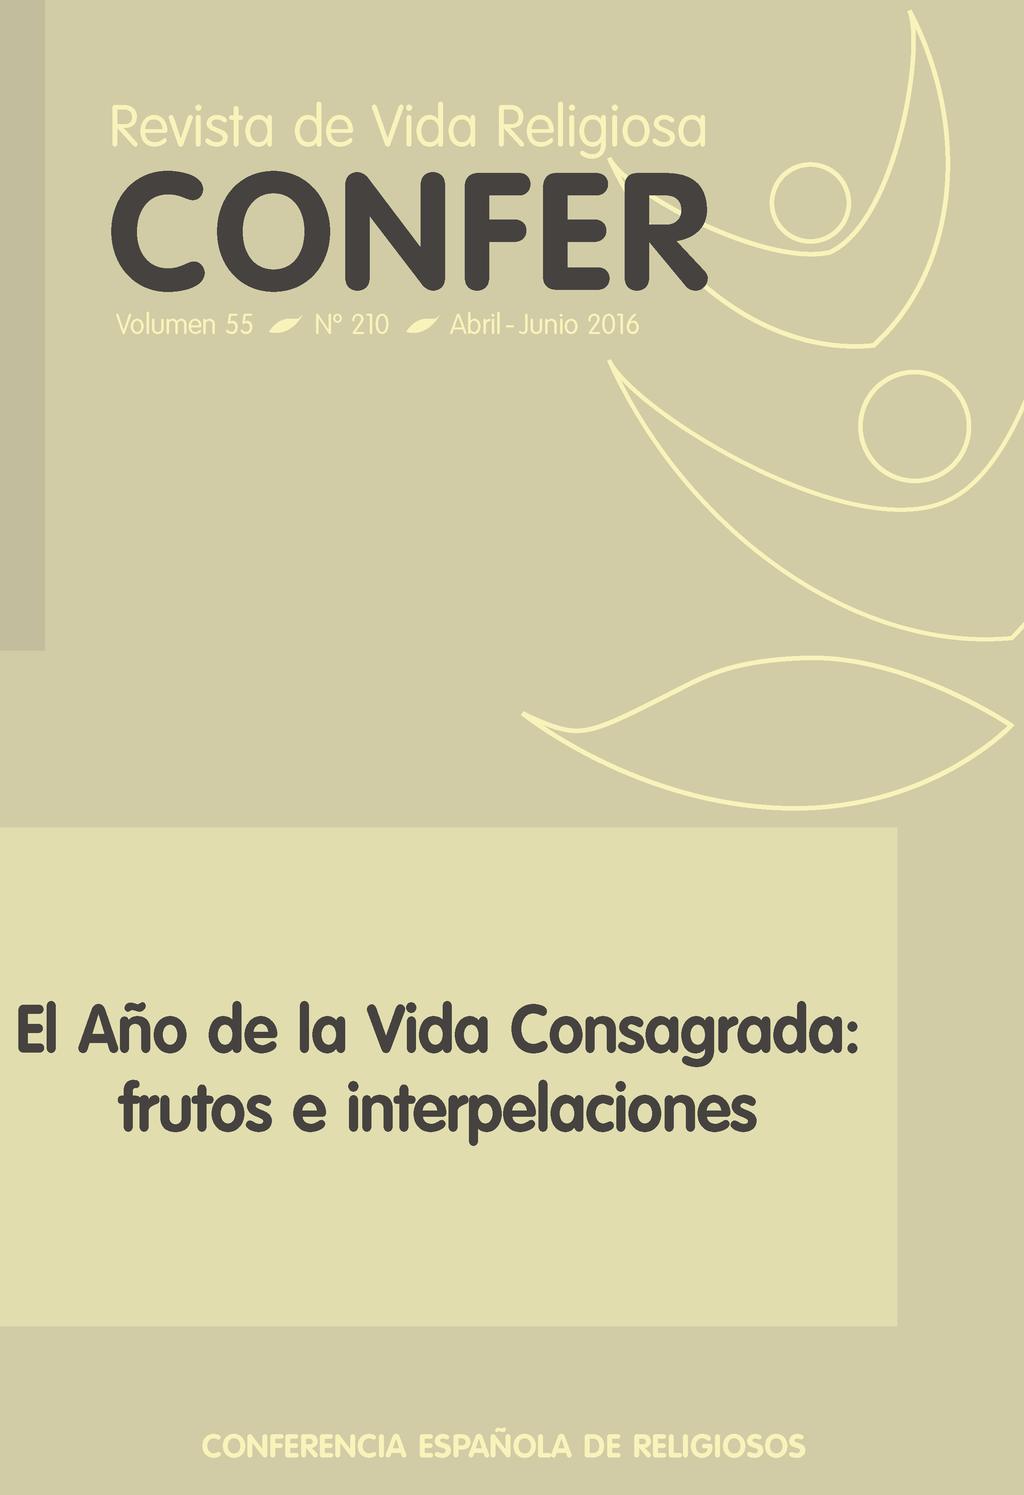 PUBLICACIONES CONFER PUBLICACIONES CONFER Revista CONFER Revista trimestral de Vida Religiosa.